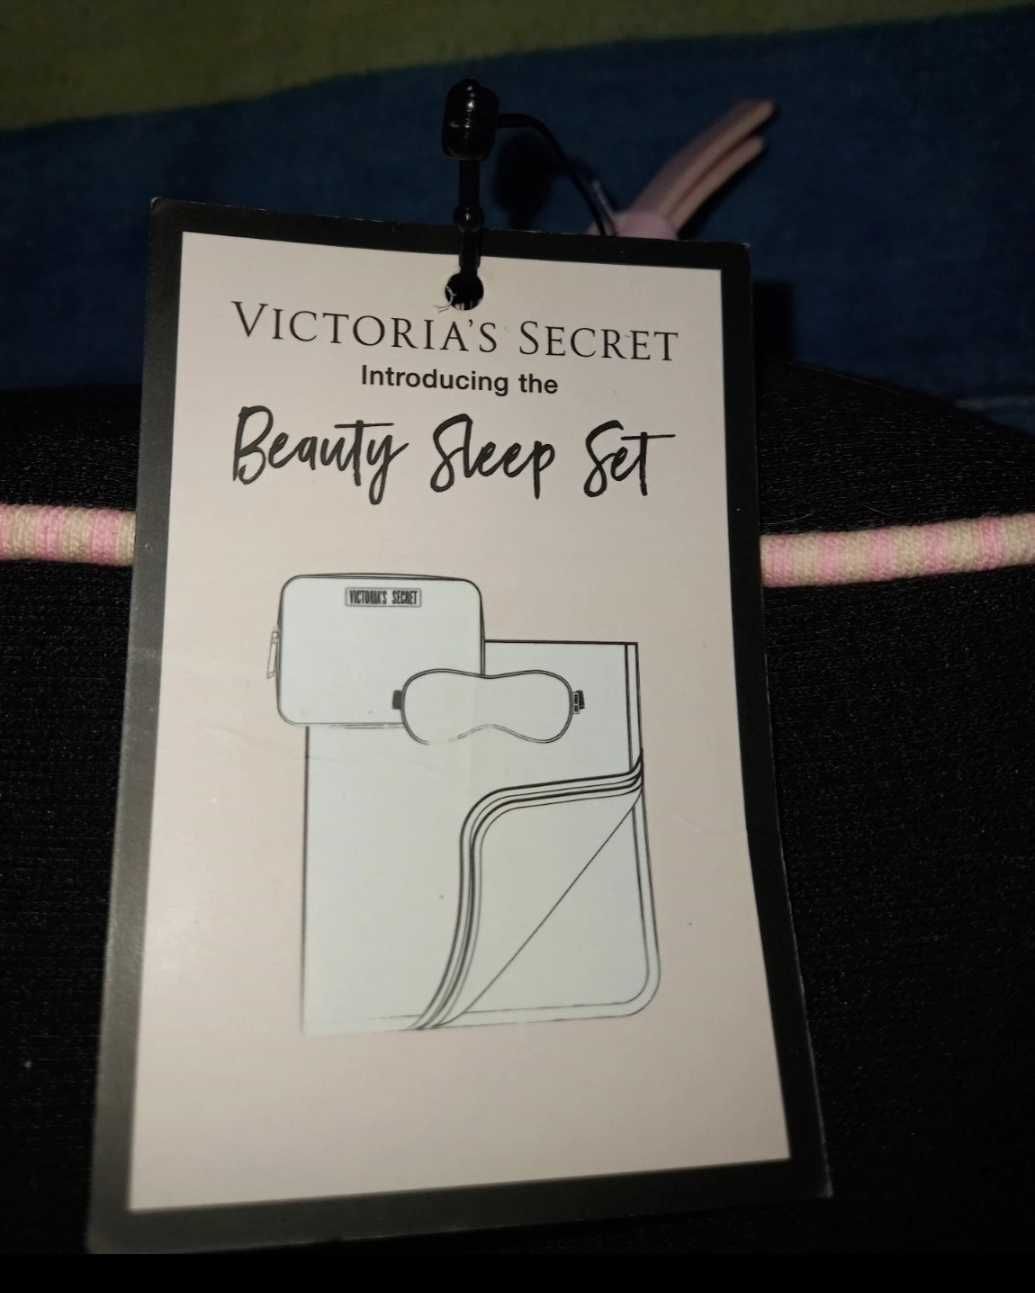 Beauty sleep set